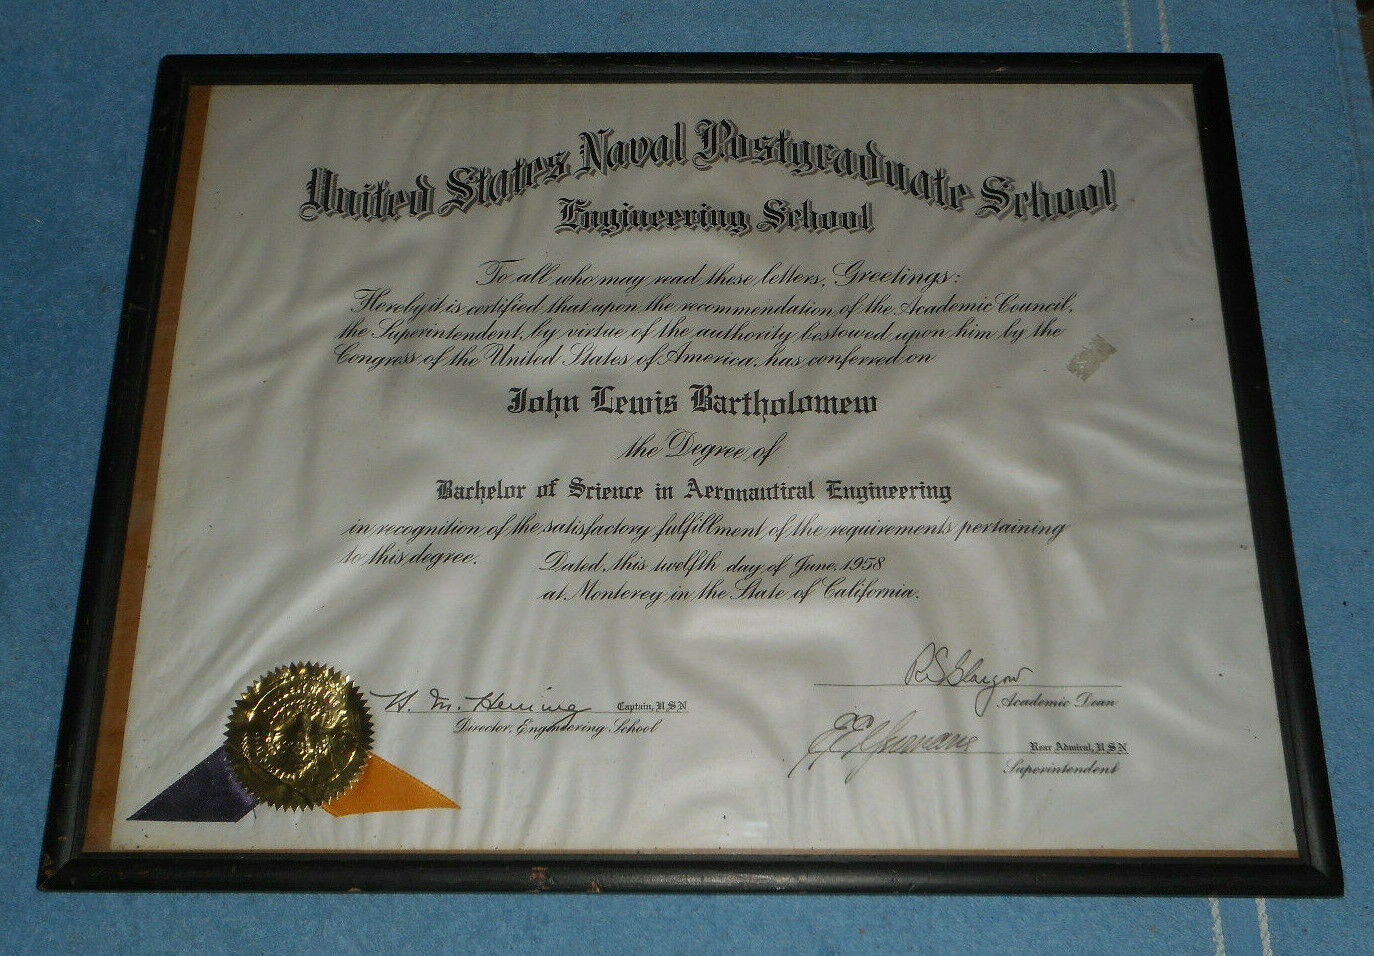 1958 US Naval Postgraduate School Degree Certificate John Lewis Bartholomew